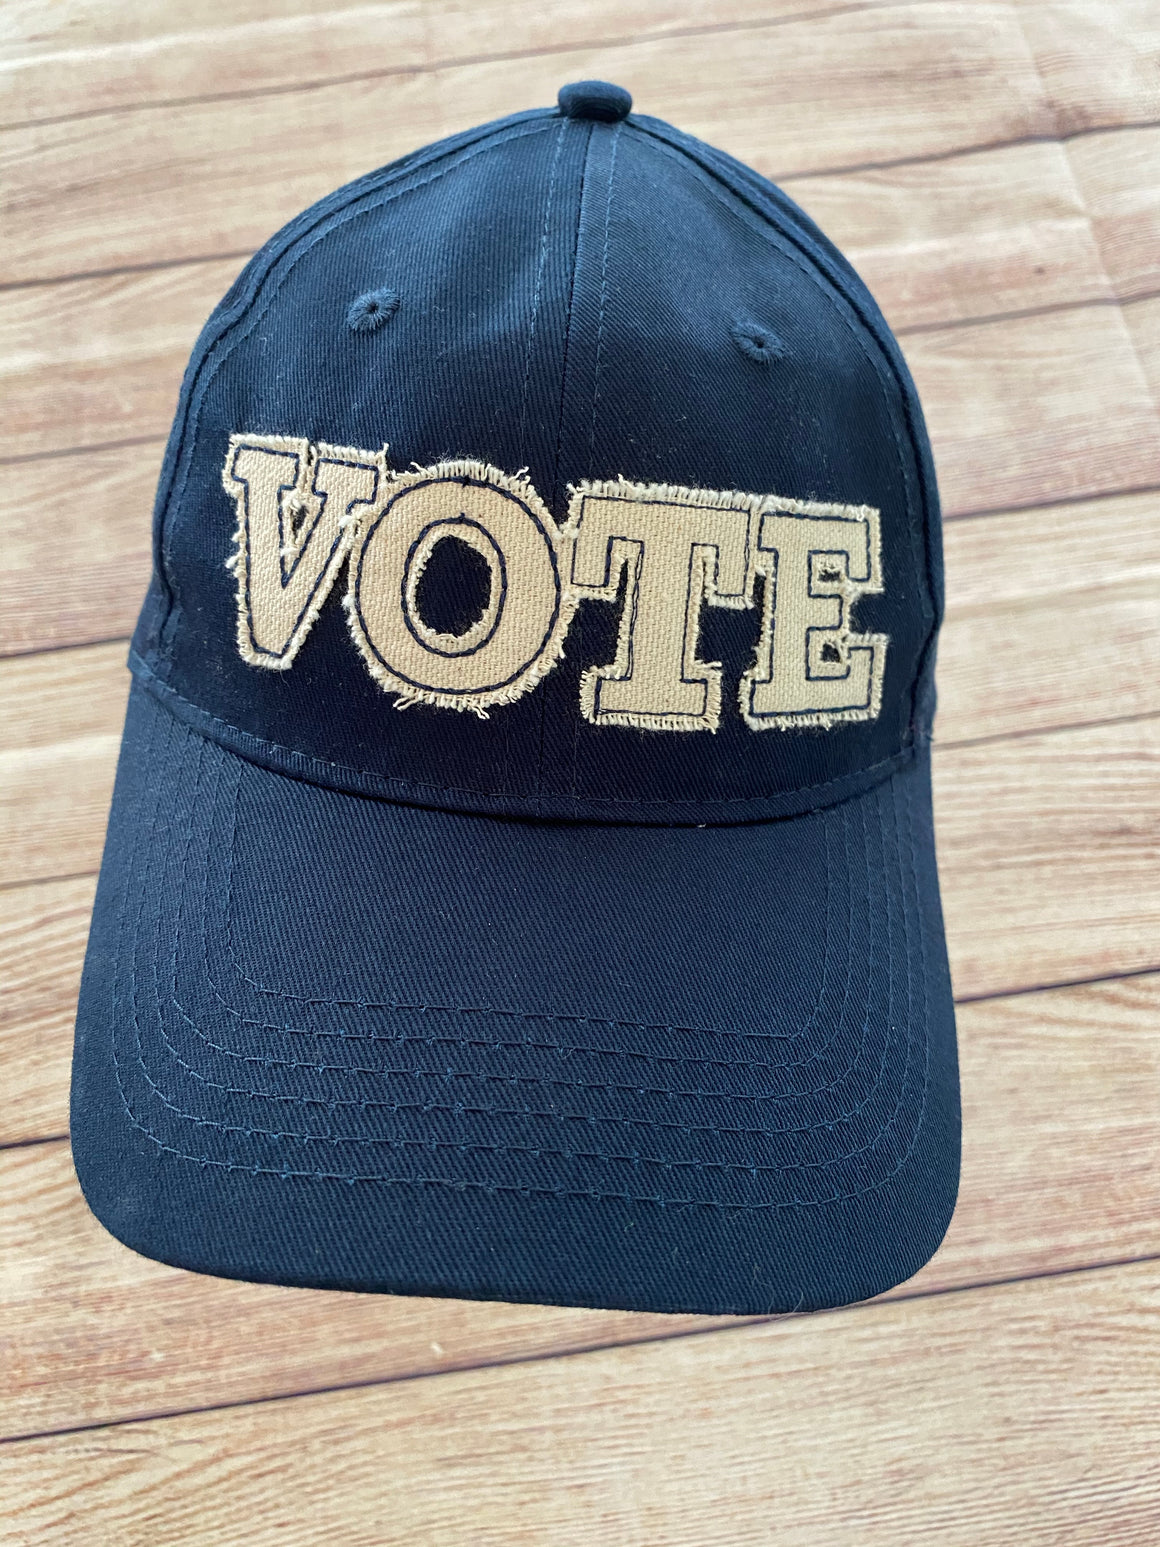 VOTE ball cap hat